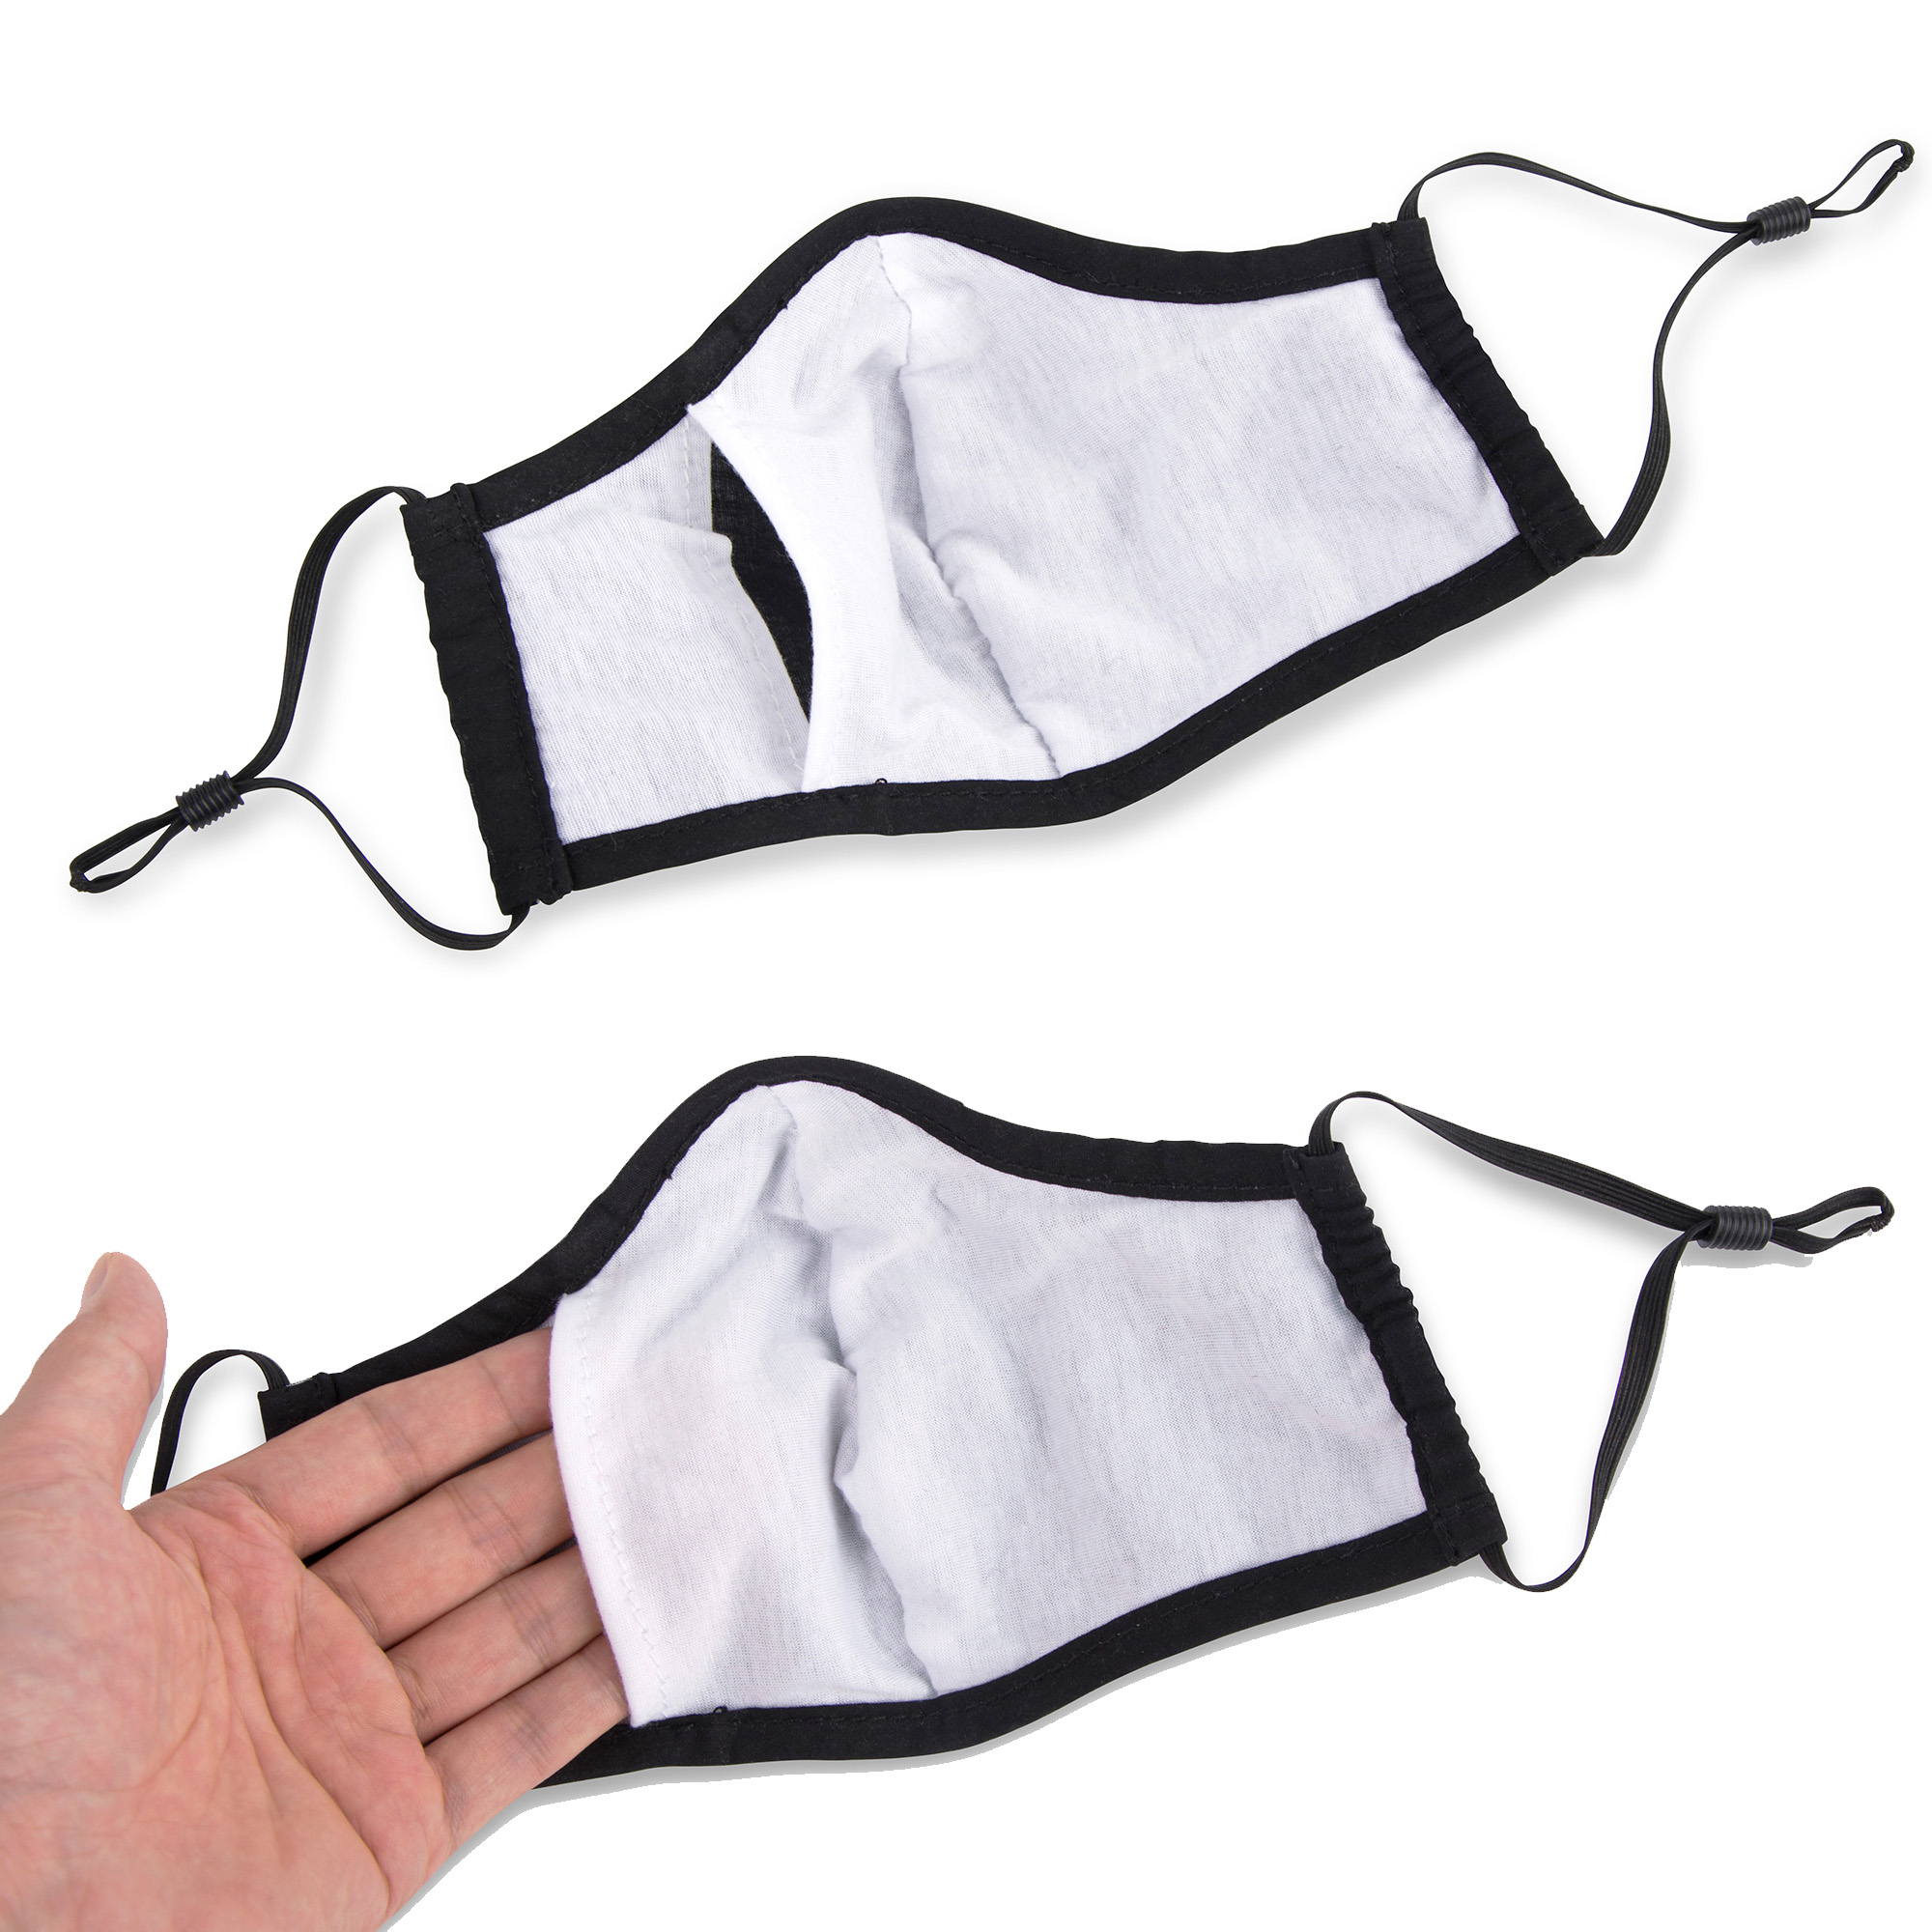 Reusable Cotton Face Mask with Adjustable Straps Filter Pocket